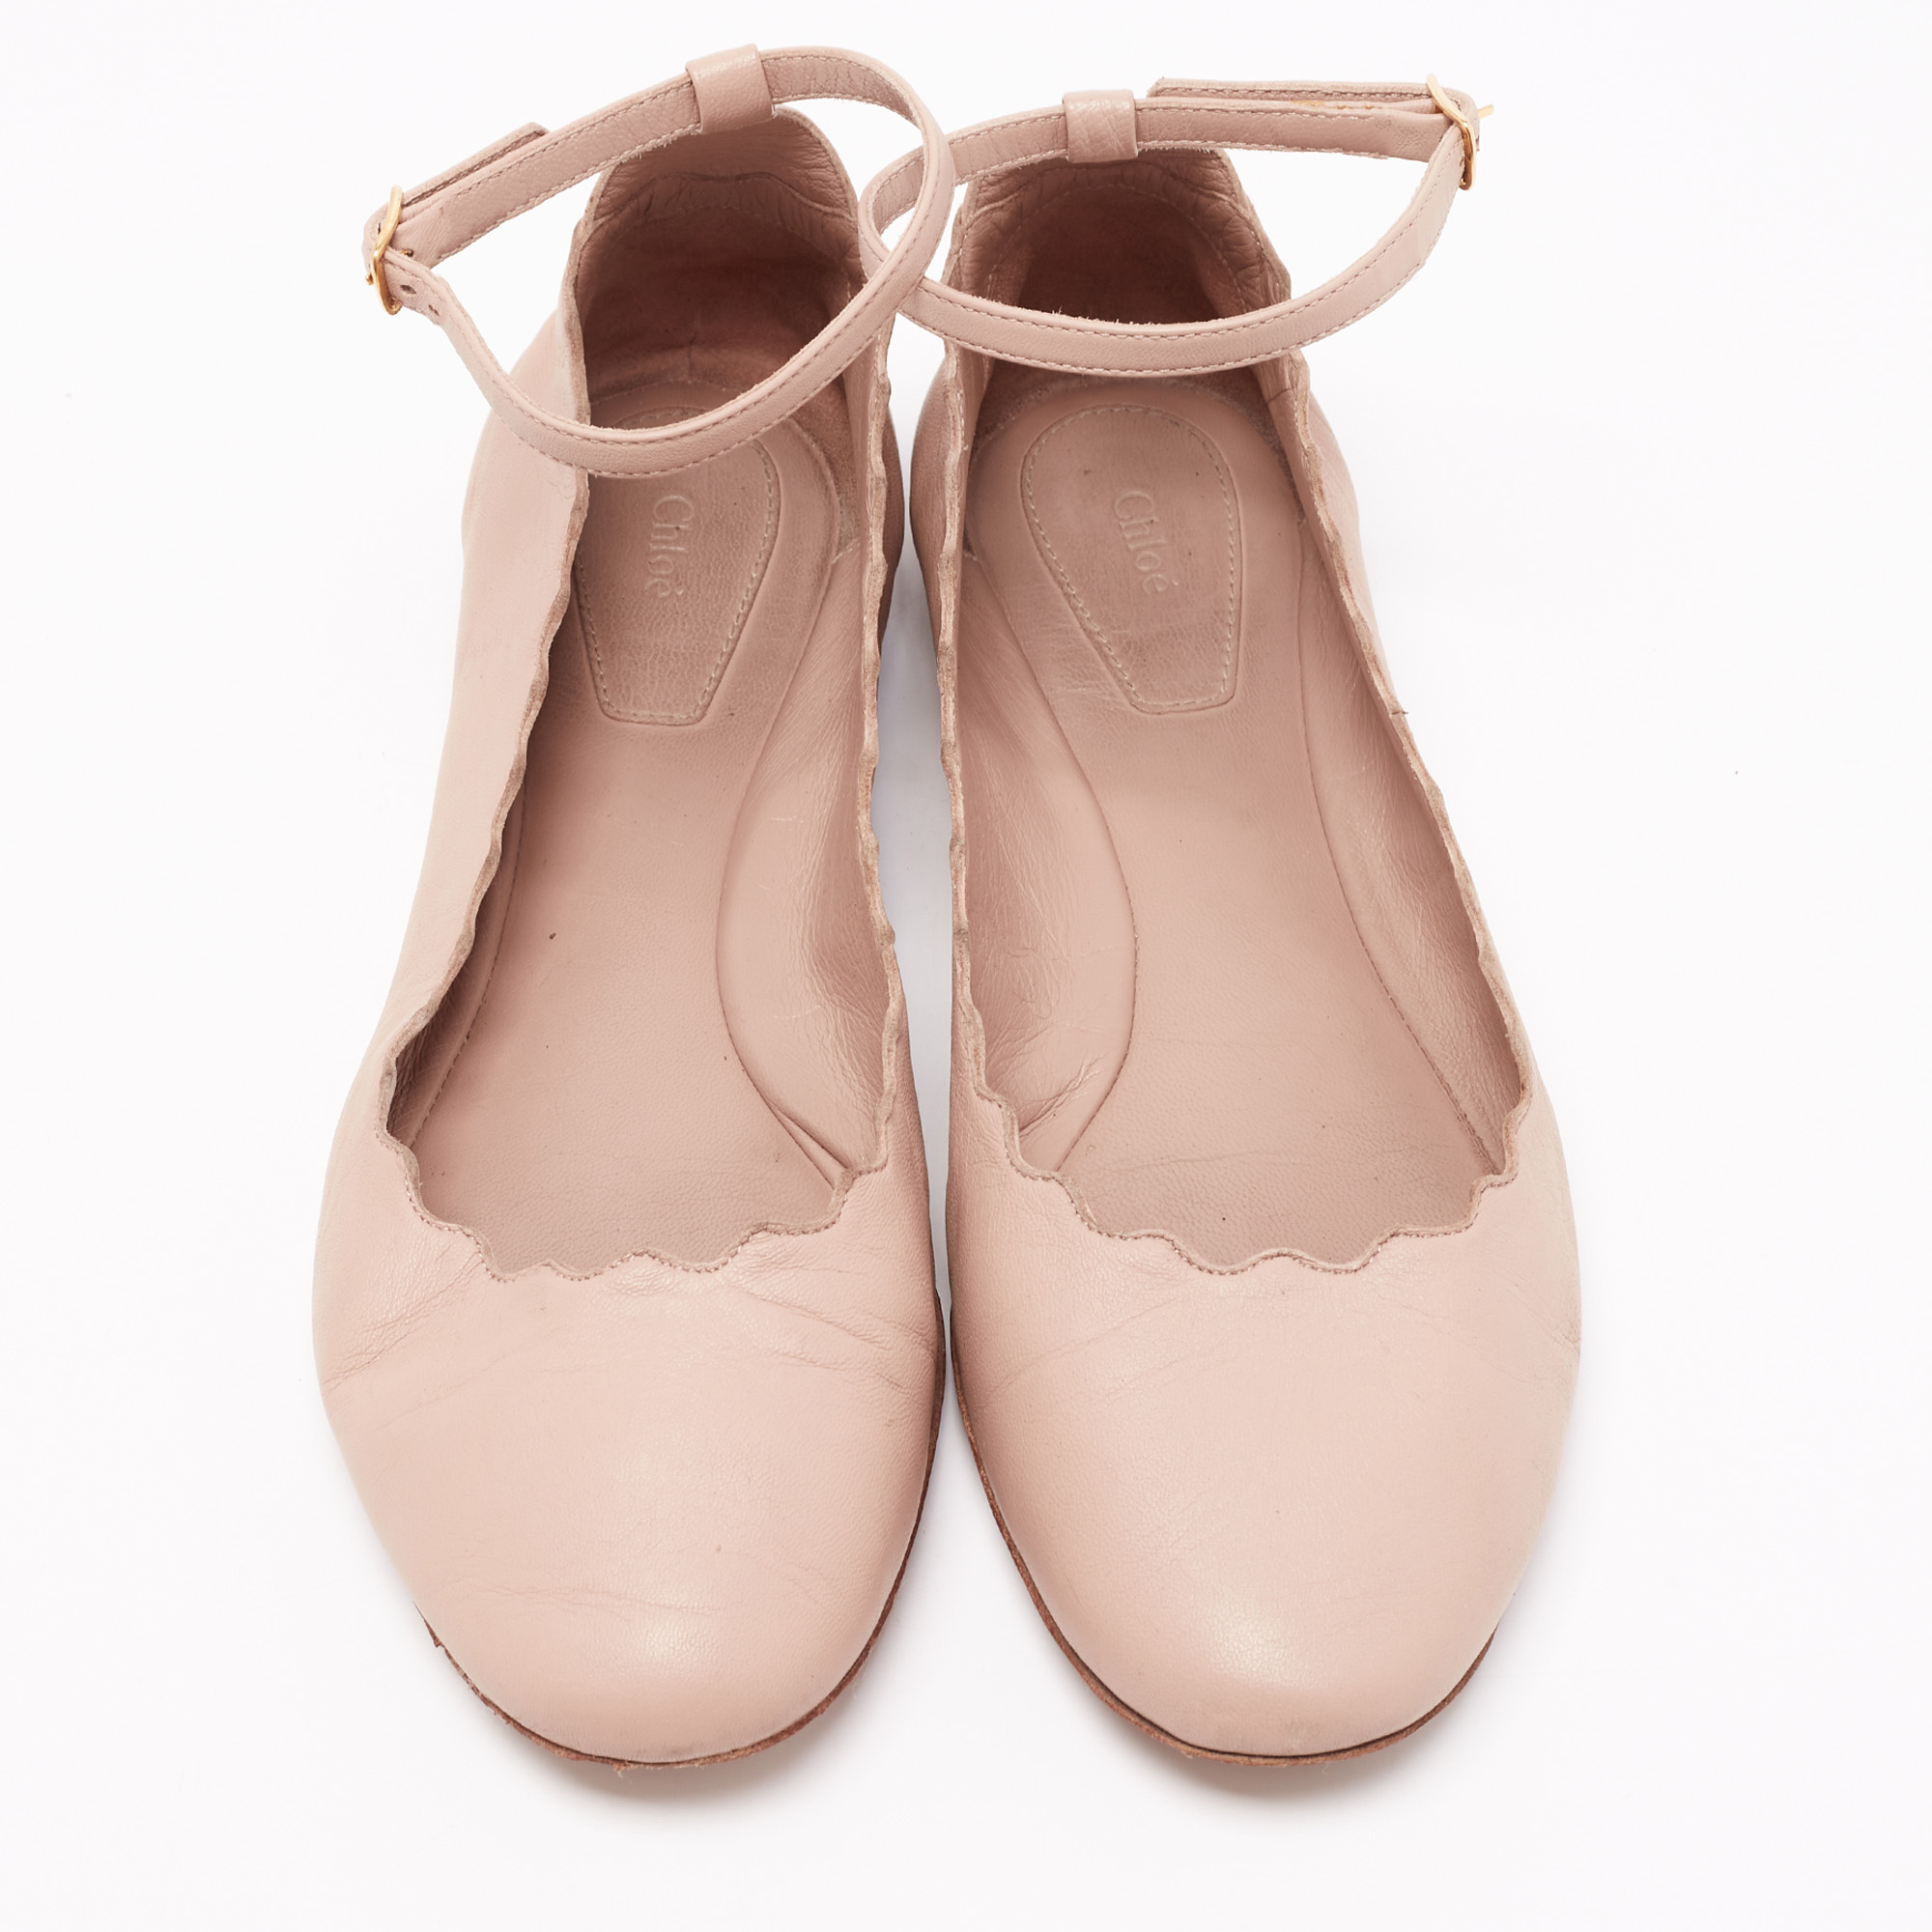 Chloe Beige Leather Lauren Scalloped Ankle Strap Ballet Flats Size 37